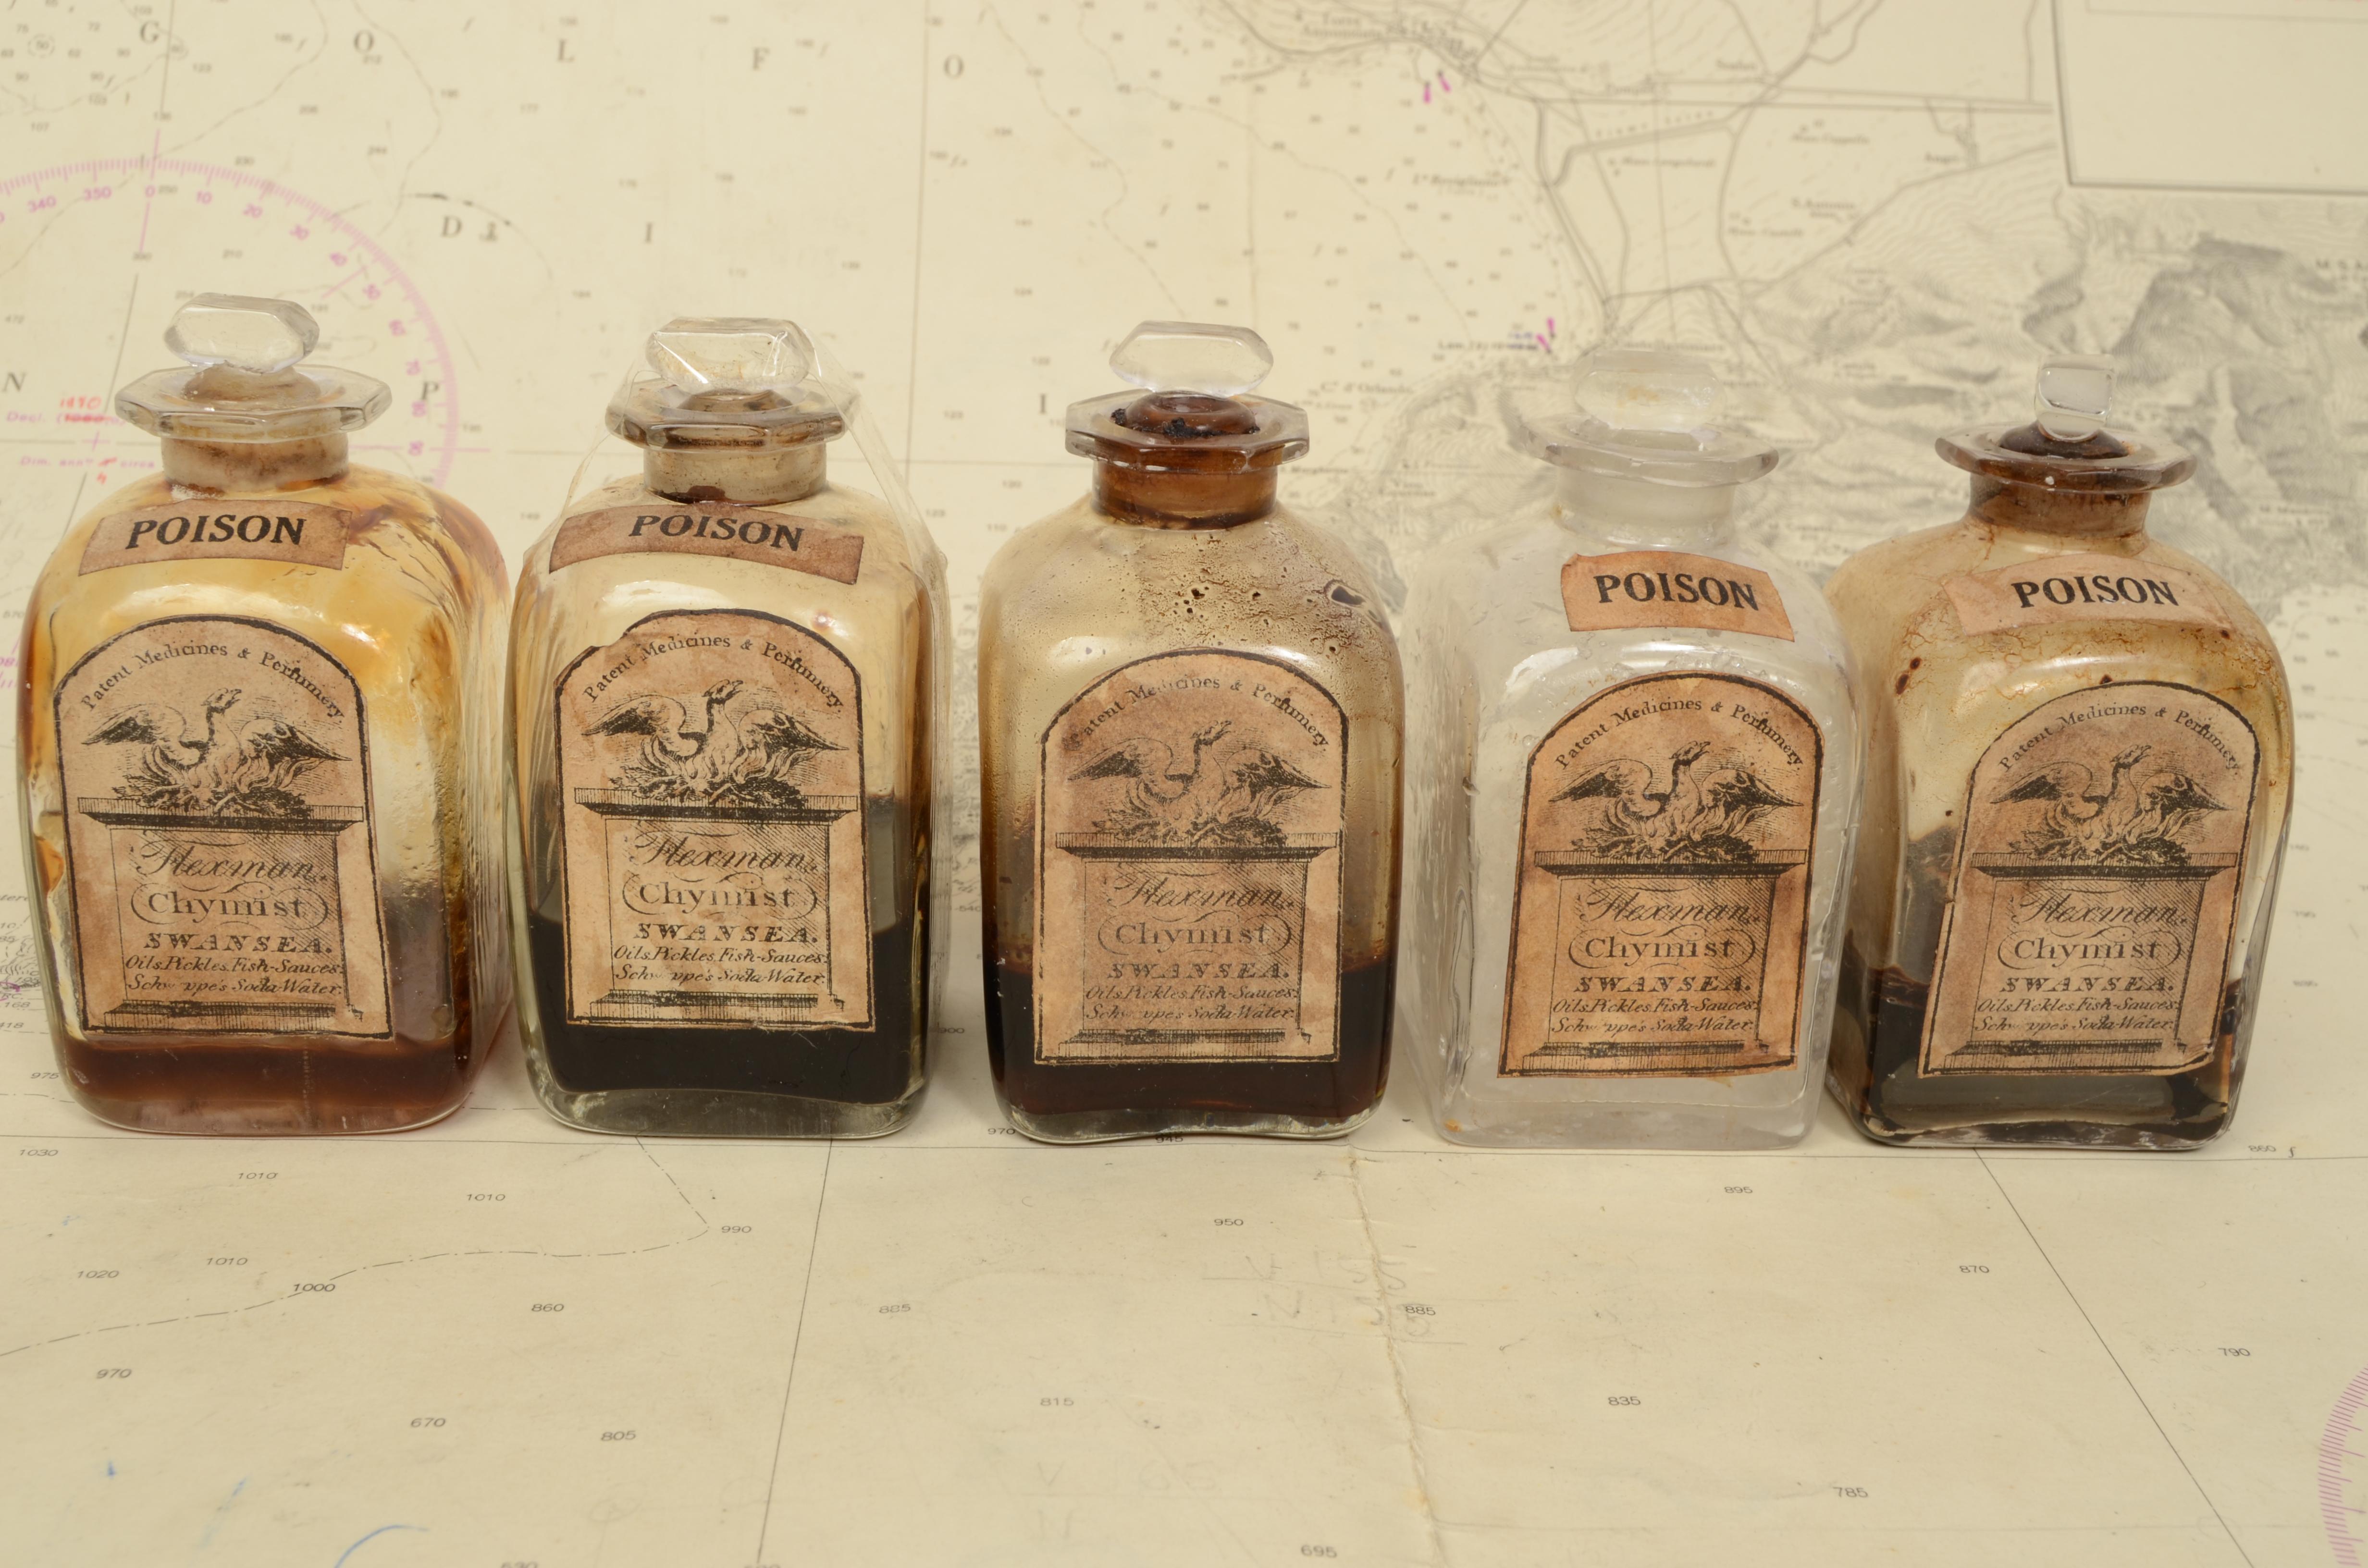 XIX Century English Apothecary Set Cabinet Medicines & Perfumery J Hexam Chymist For Sale 4